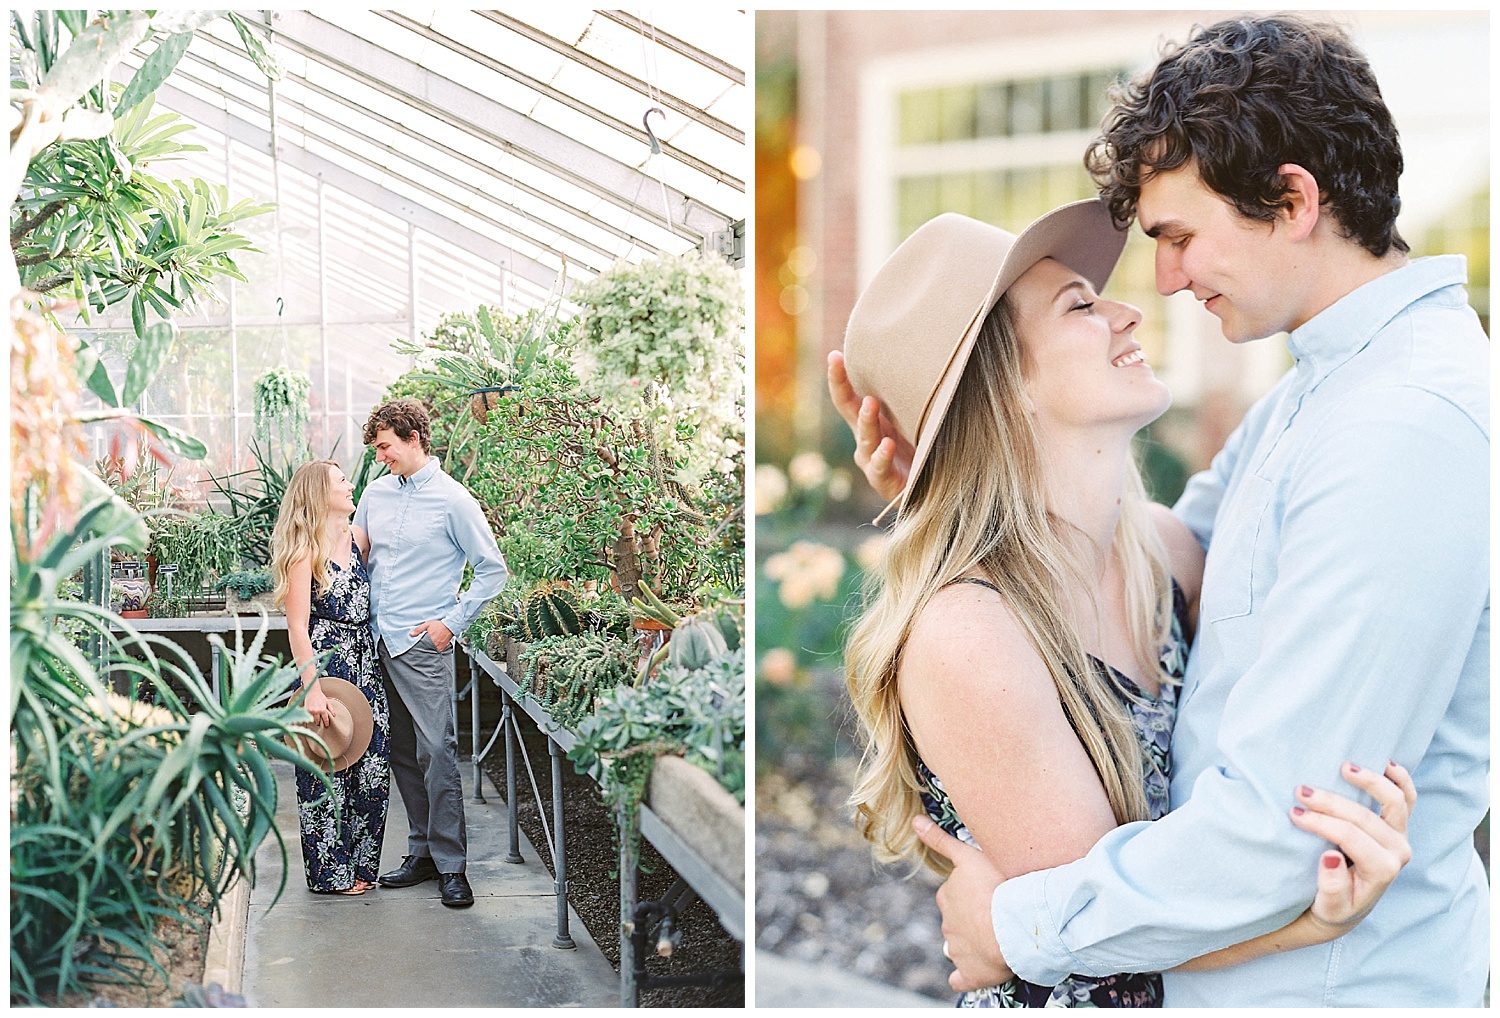 Kingwood-center-gardens-mansfield-ohio-couples-session-greenhouse-anniversary-portraits